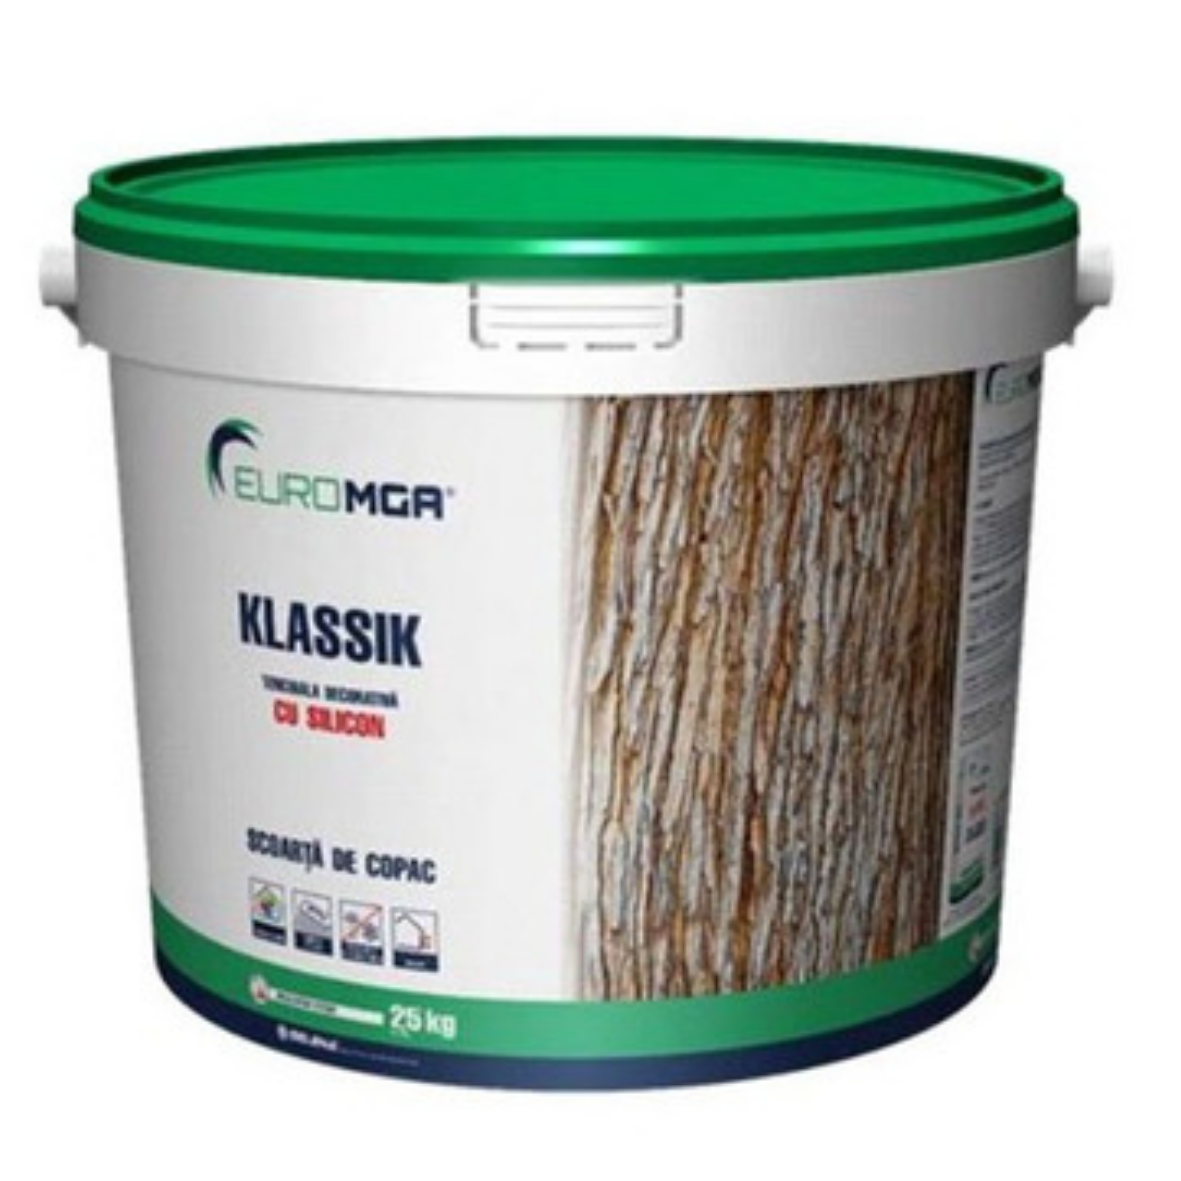 Decorative plasters - KLASSIK EuroMGA K20 25kg Silicone Decorative Plaster, https:maxbau.ro